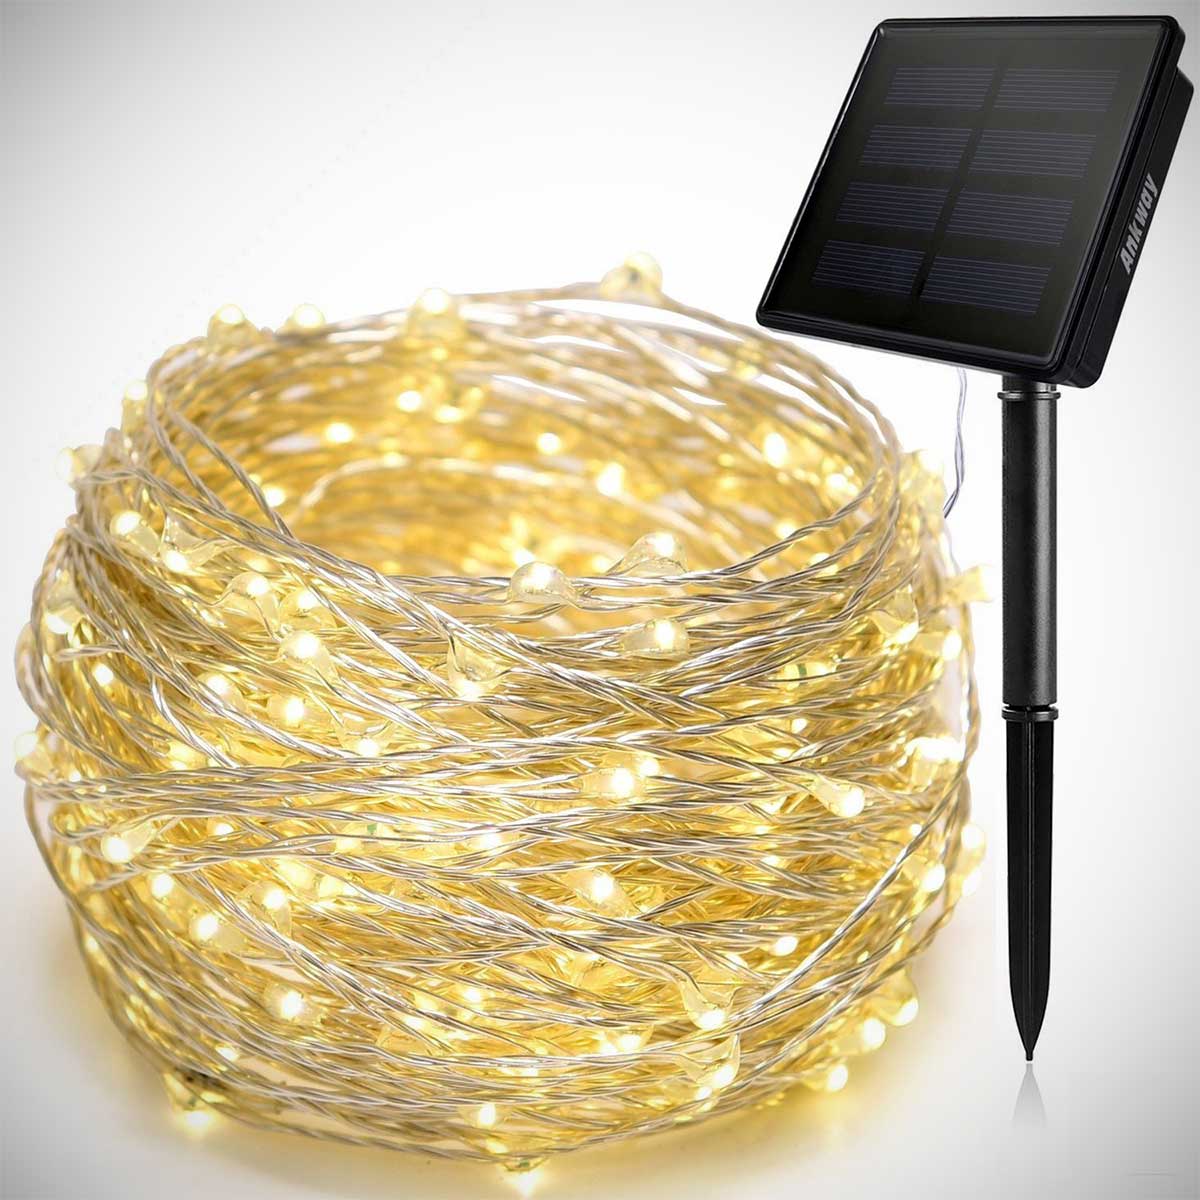 Ankway 200 LED Solar String Lights